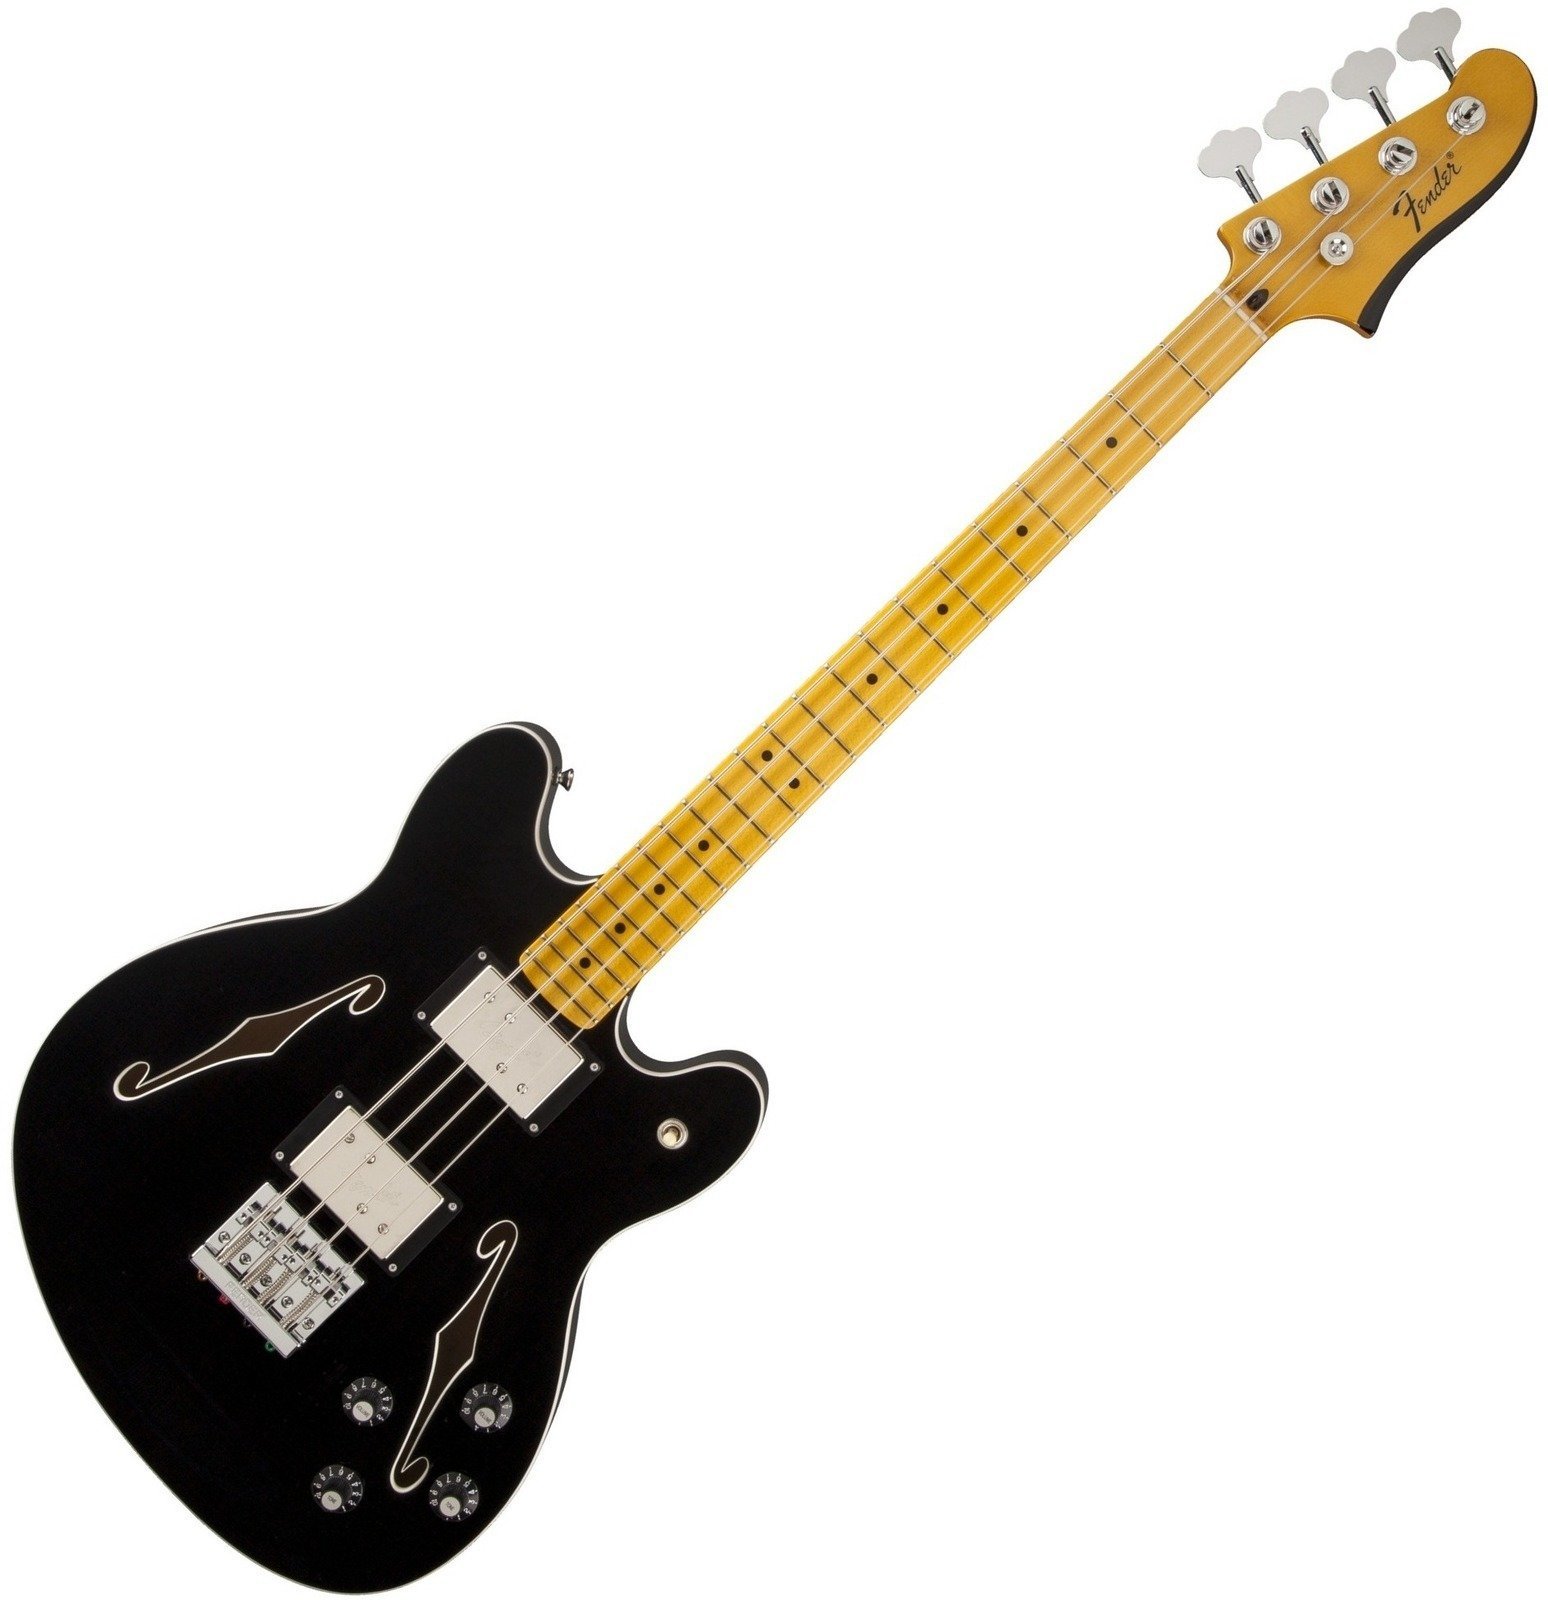 Basse semi-acoustique Fender Starcaster Bass Black